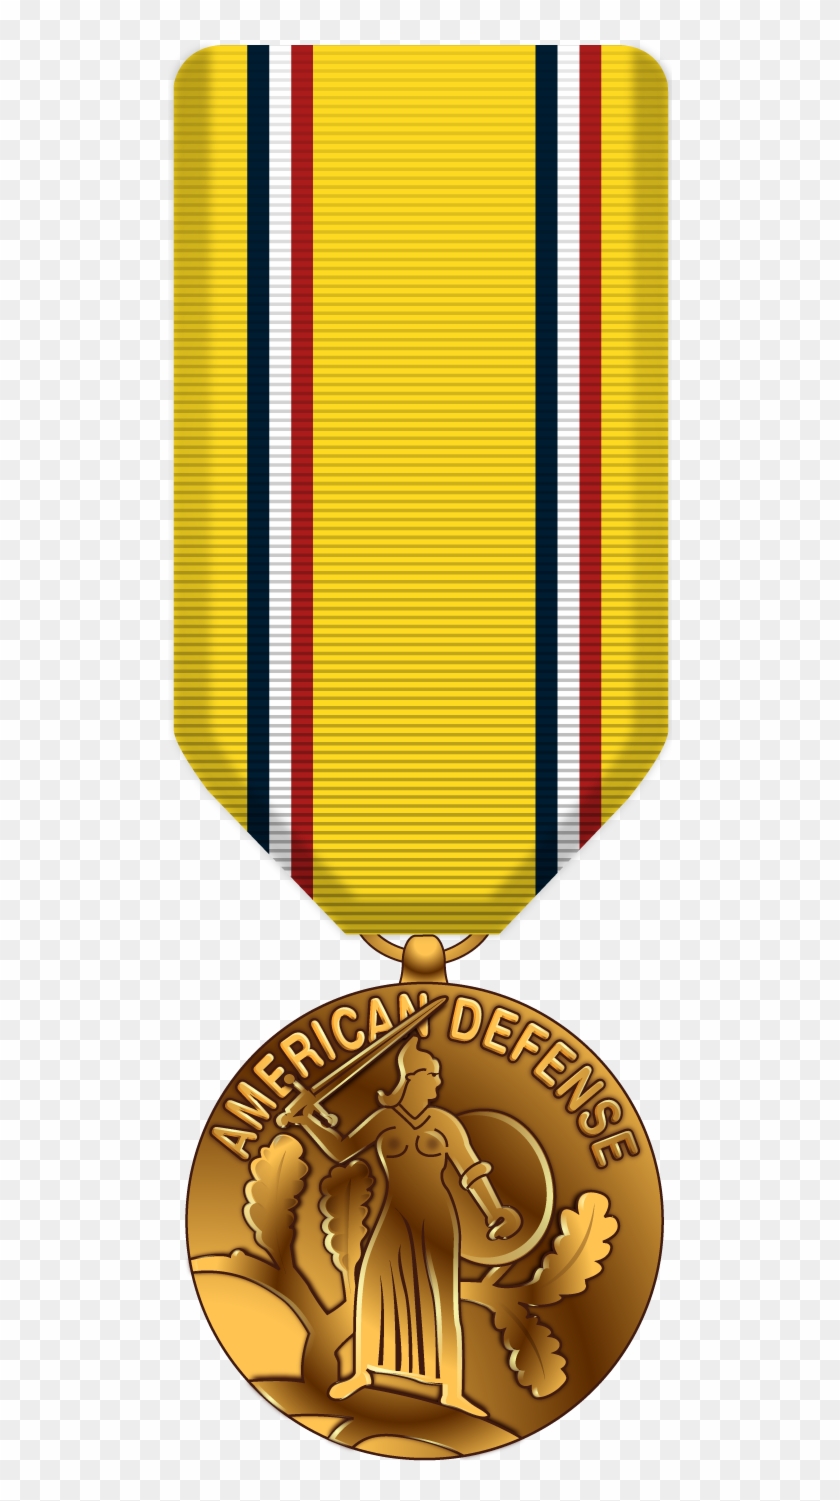 American Defense Service Medal - American Defense Service Medal Png #627715